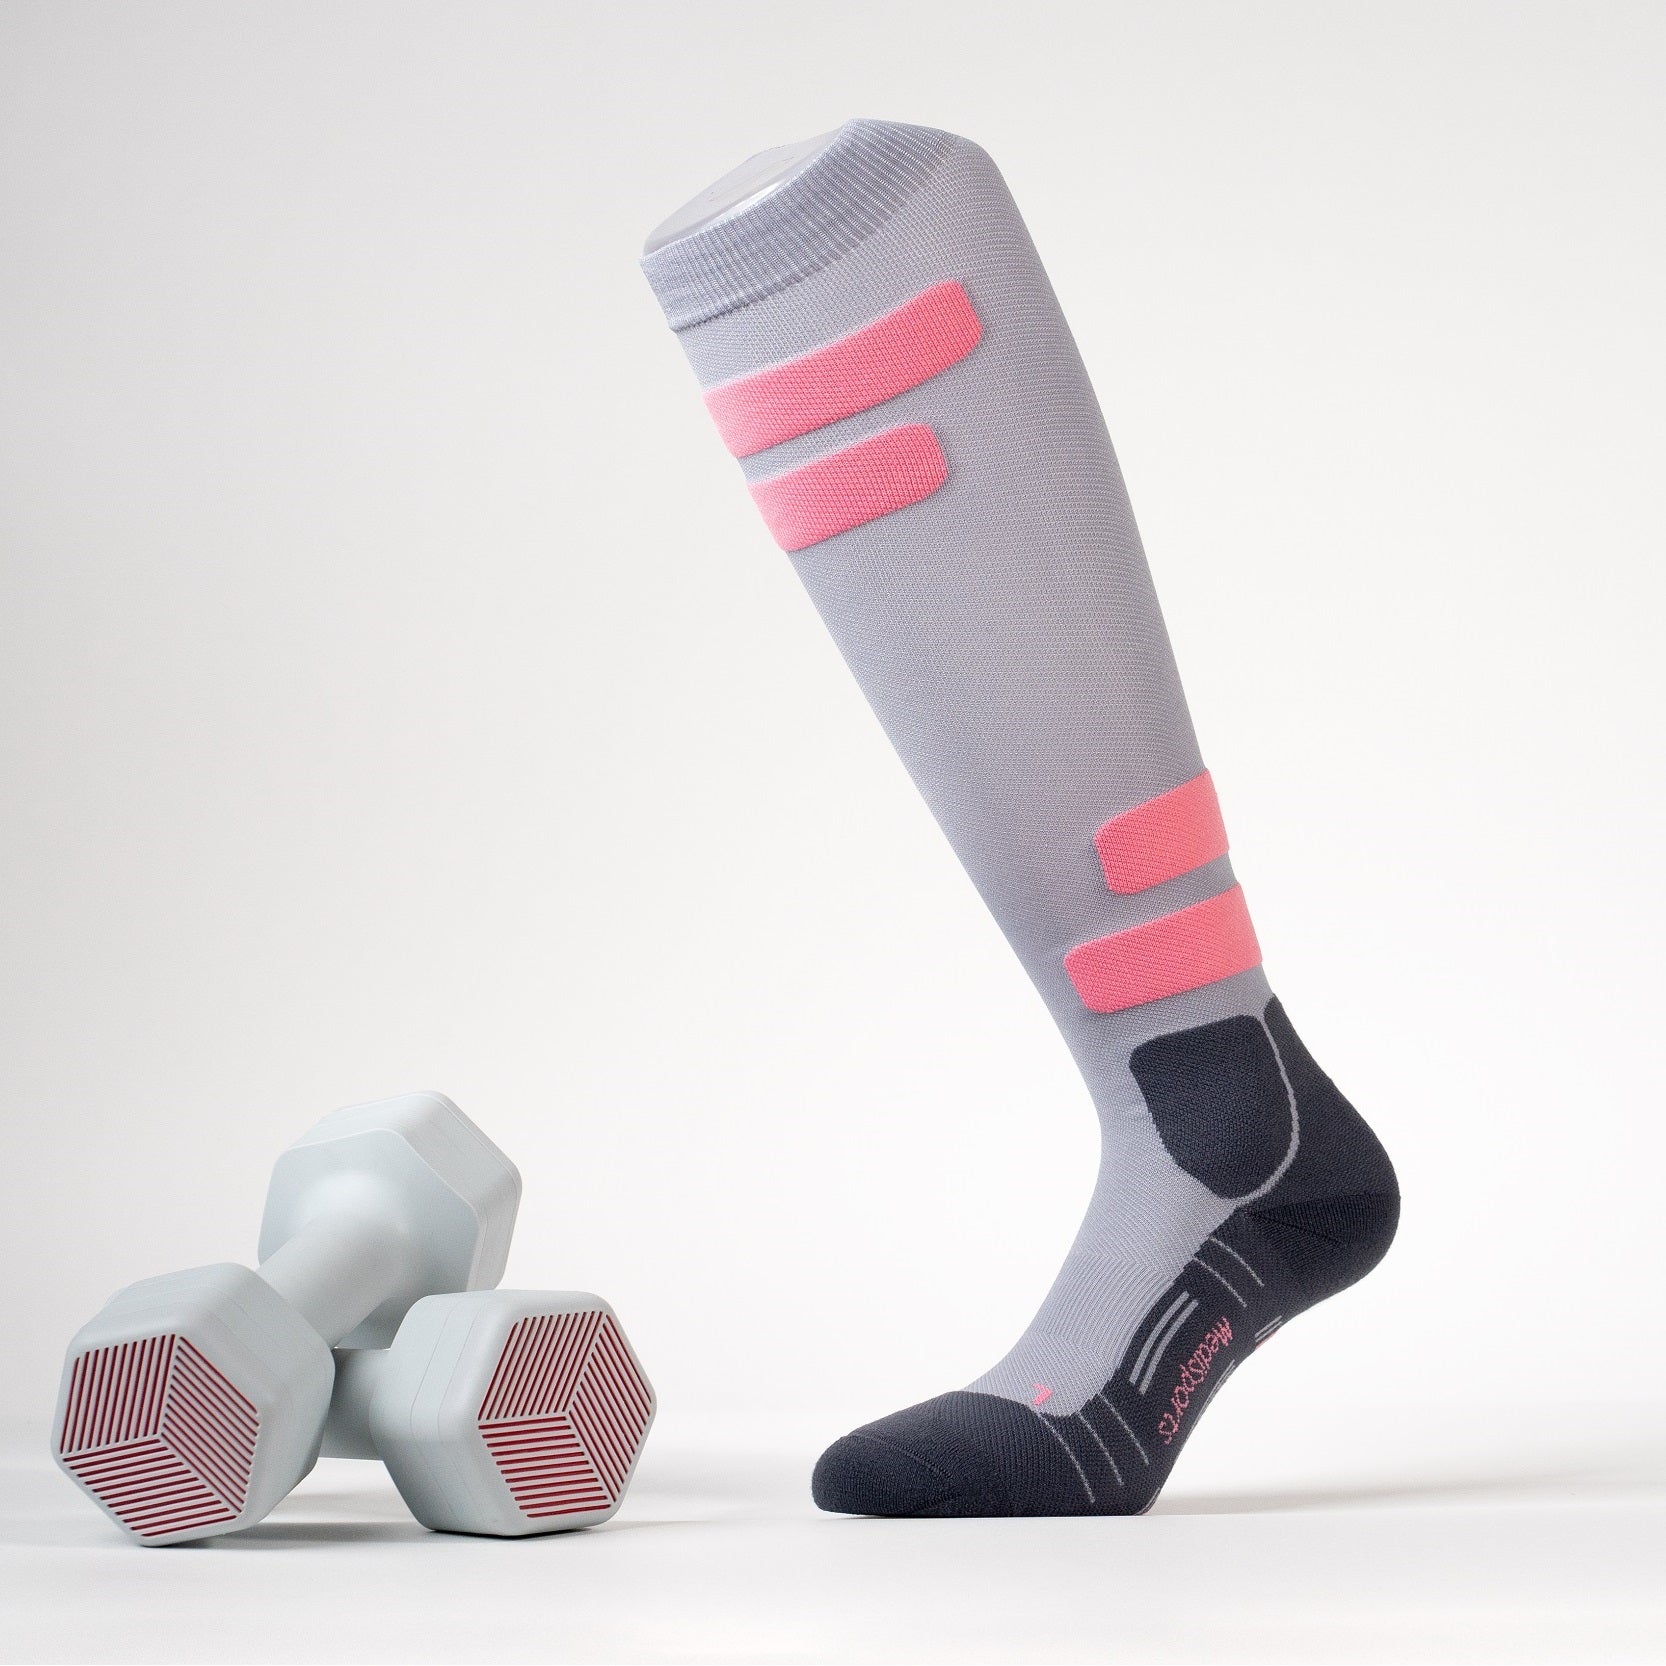 MediSports Ignite Performance Socks (20-30 mmHg) - Grey/Pink